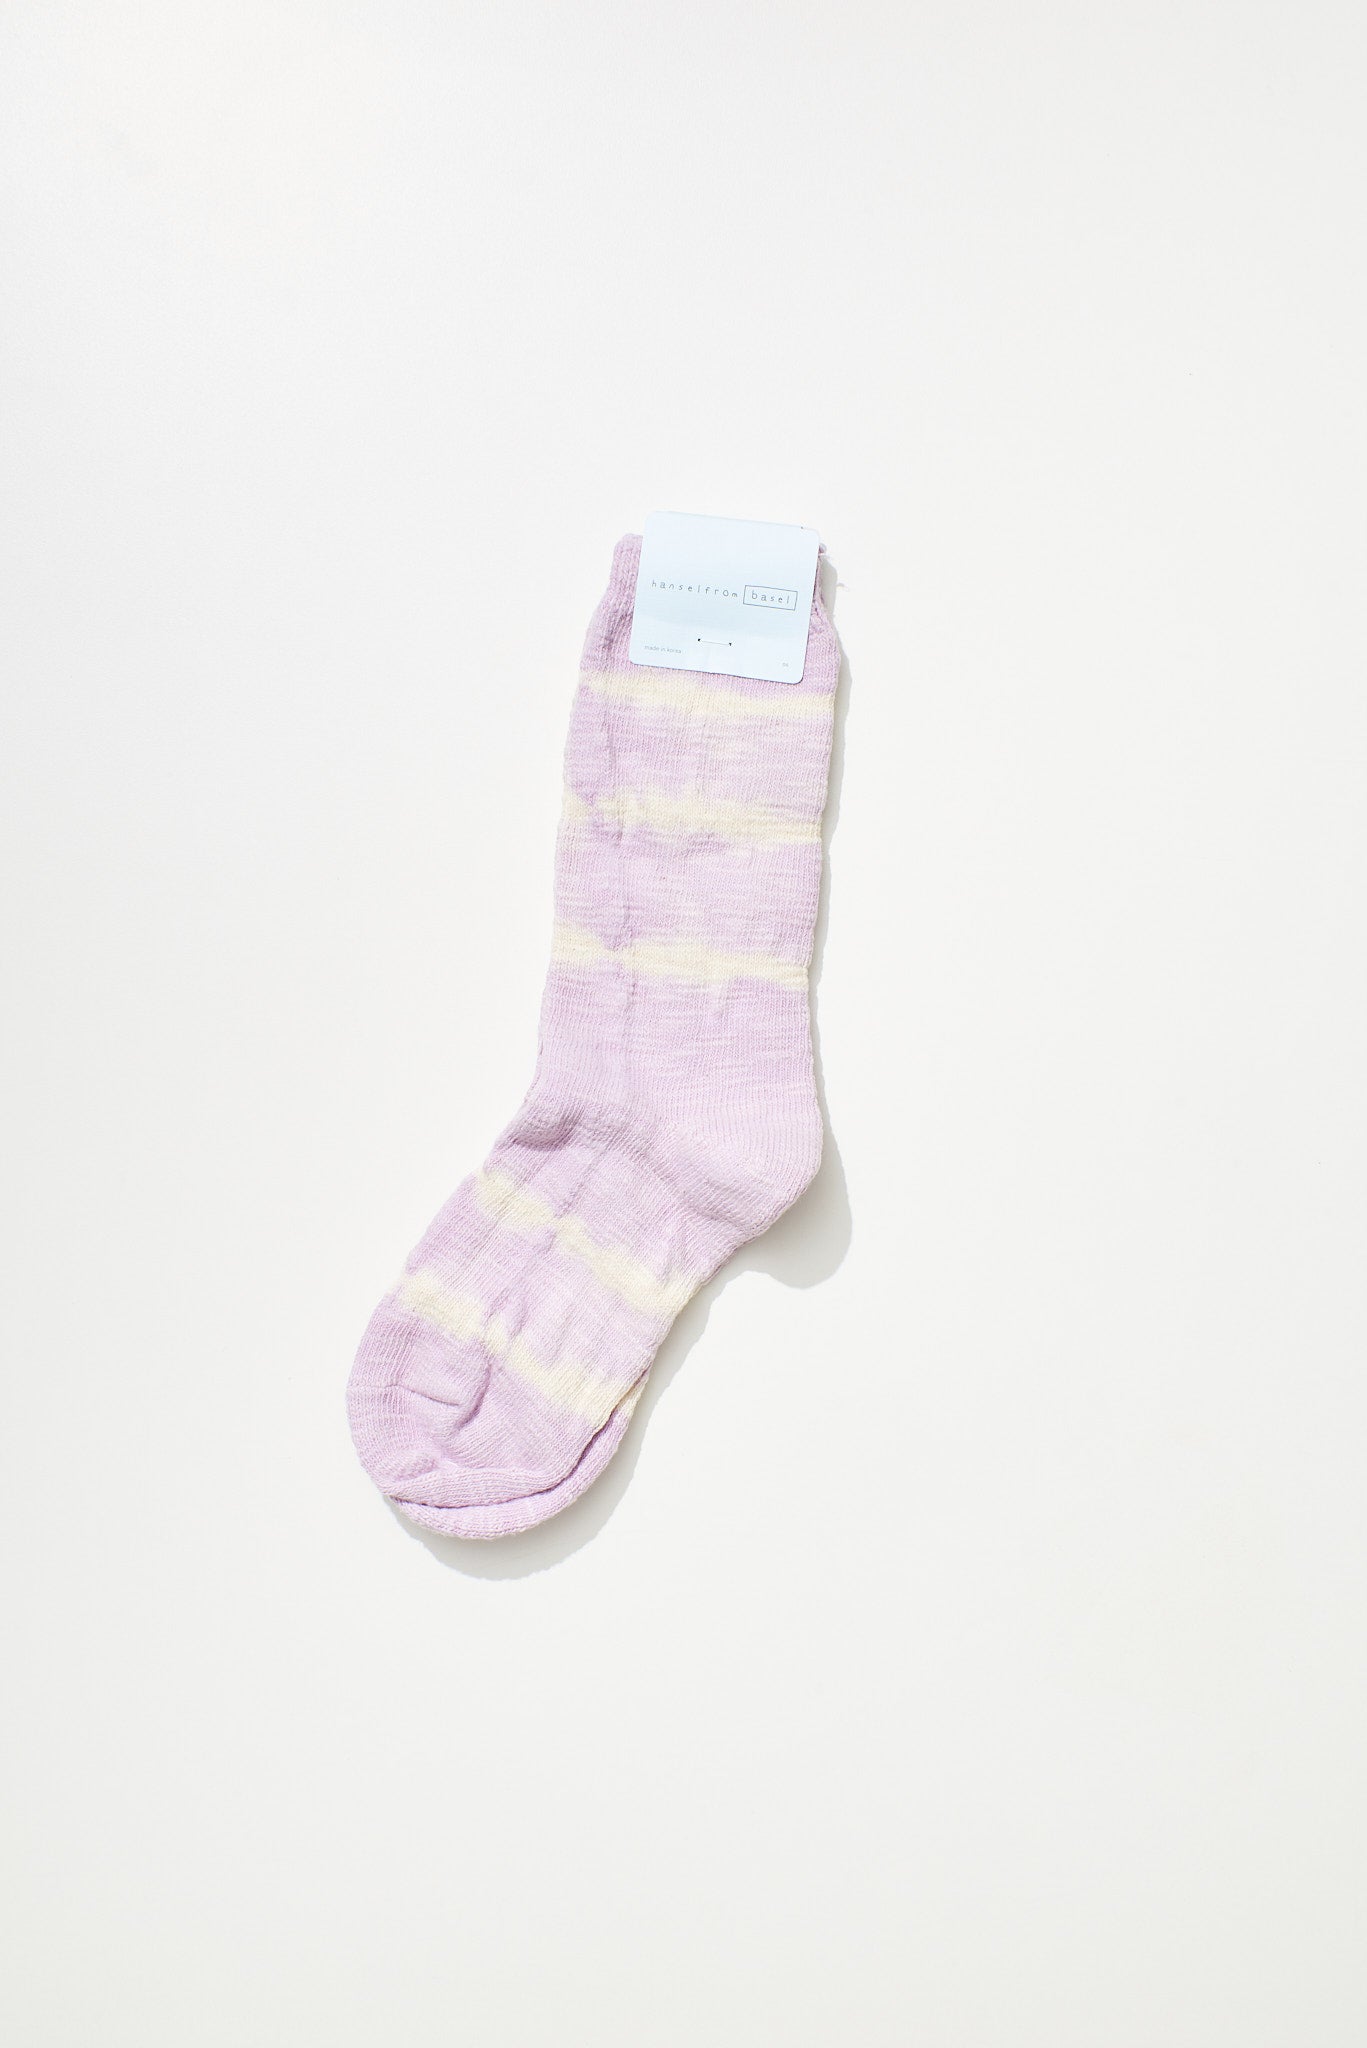 Tie Dye Crew Sock / Lilac